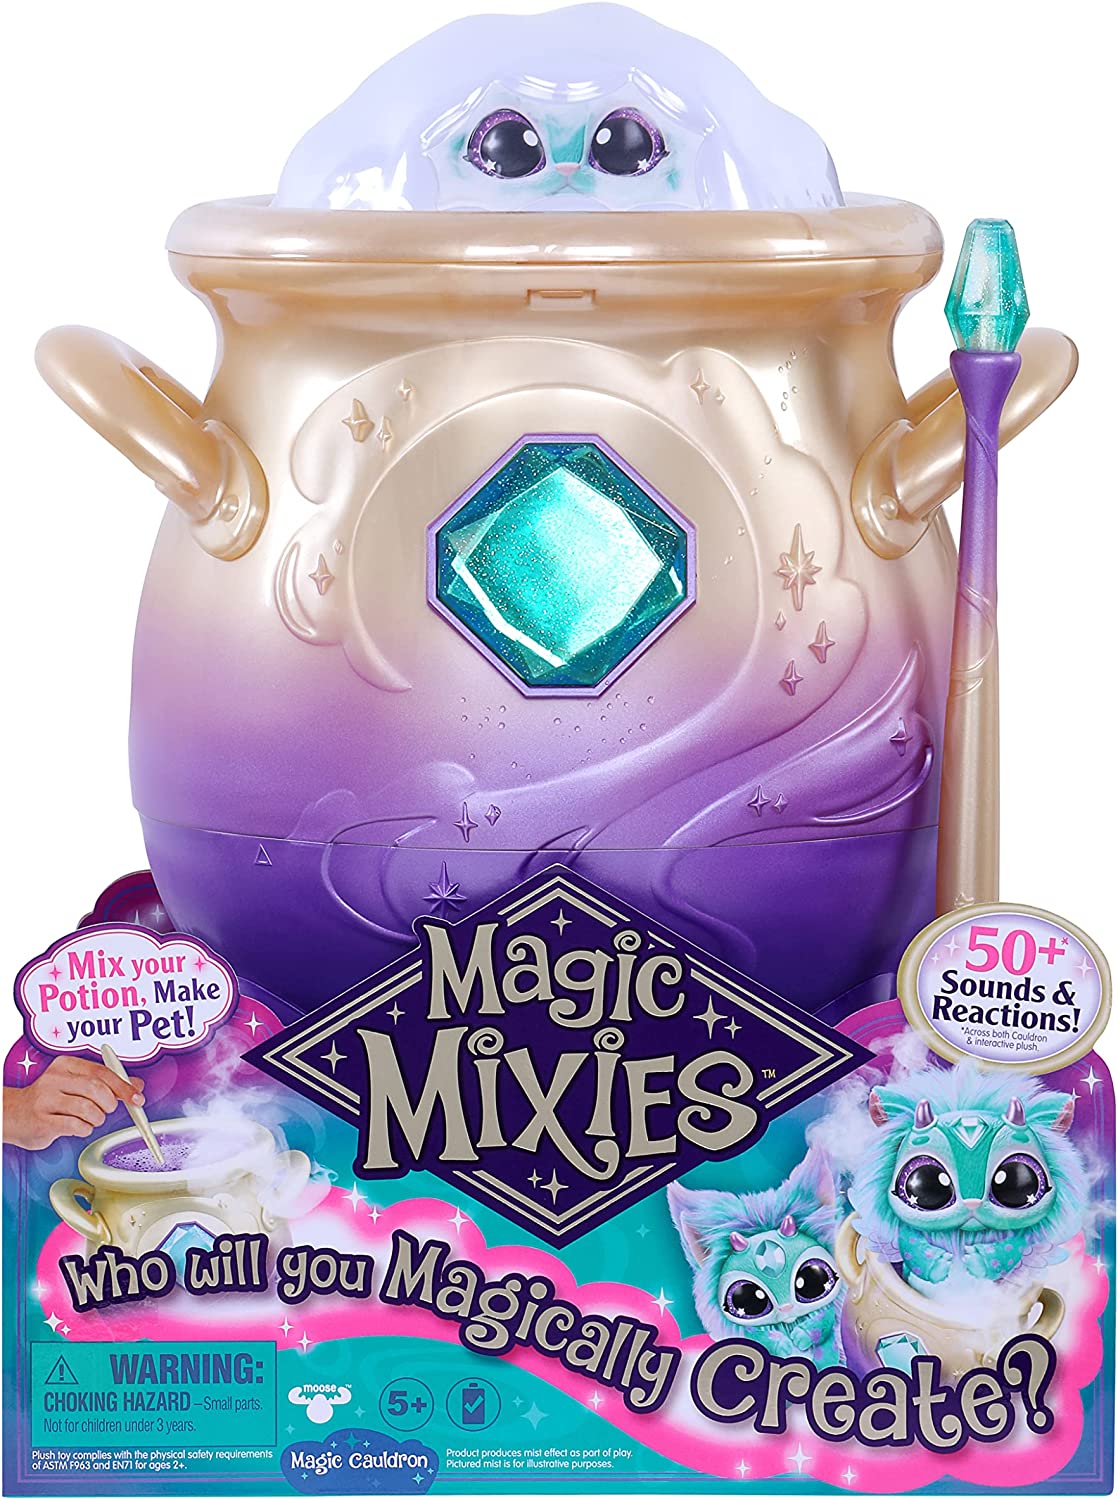 Magic Mixies Pet Potion Little Girls’ Toy